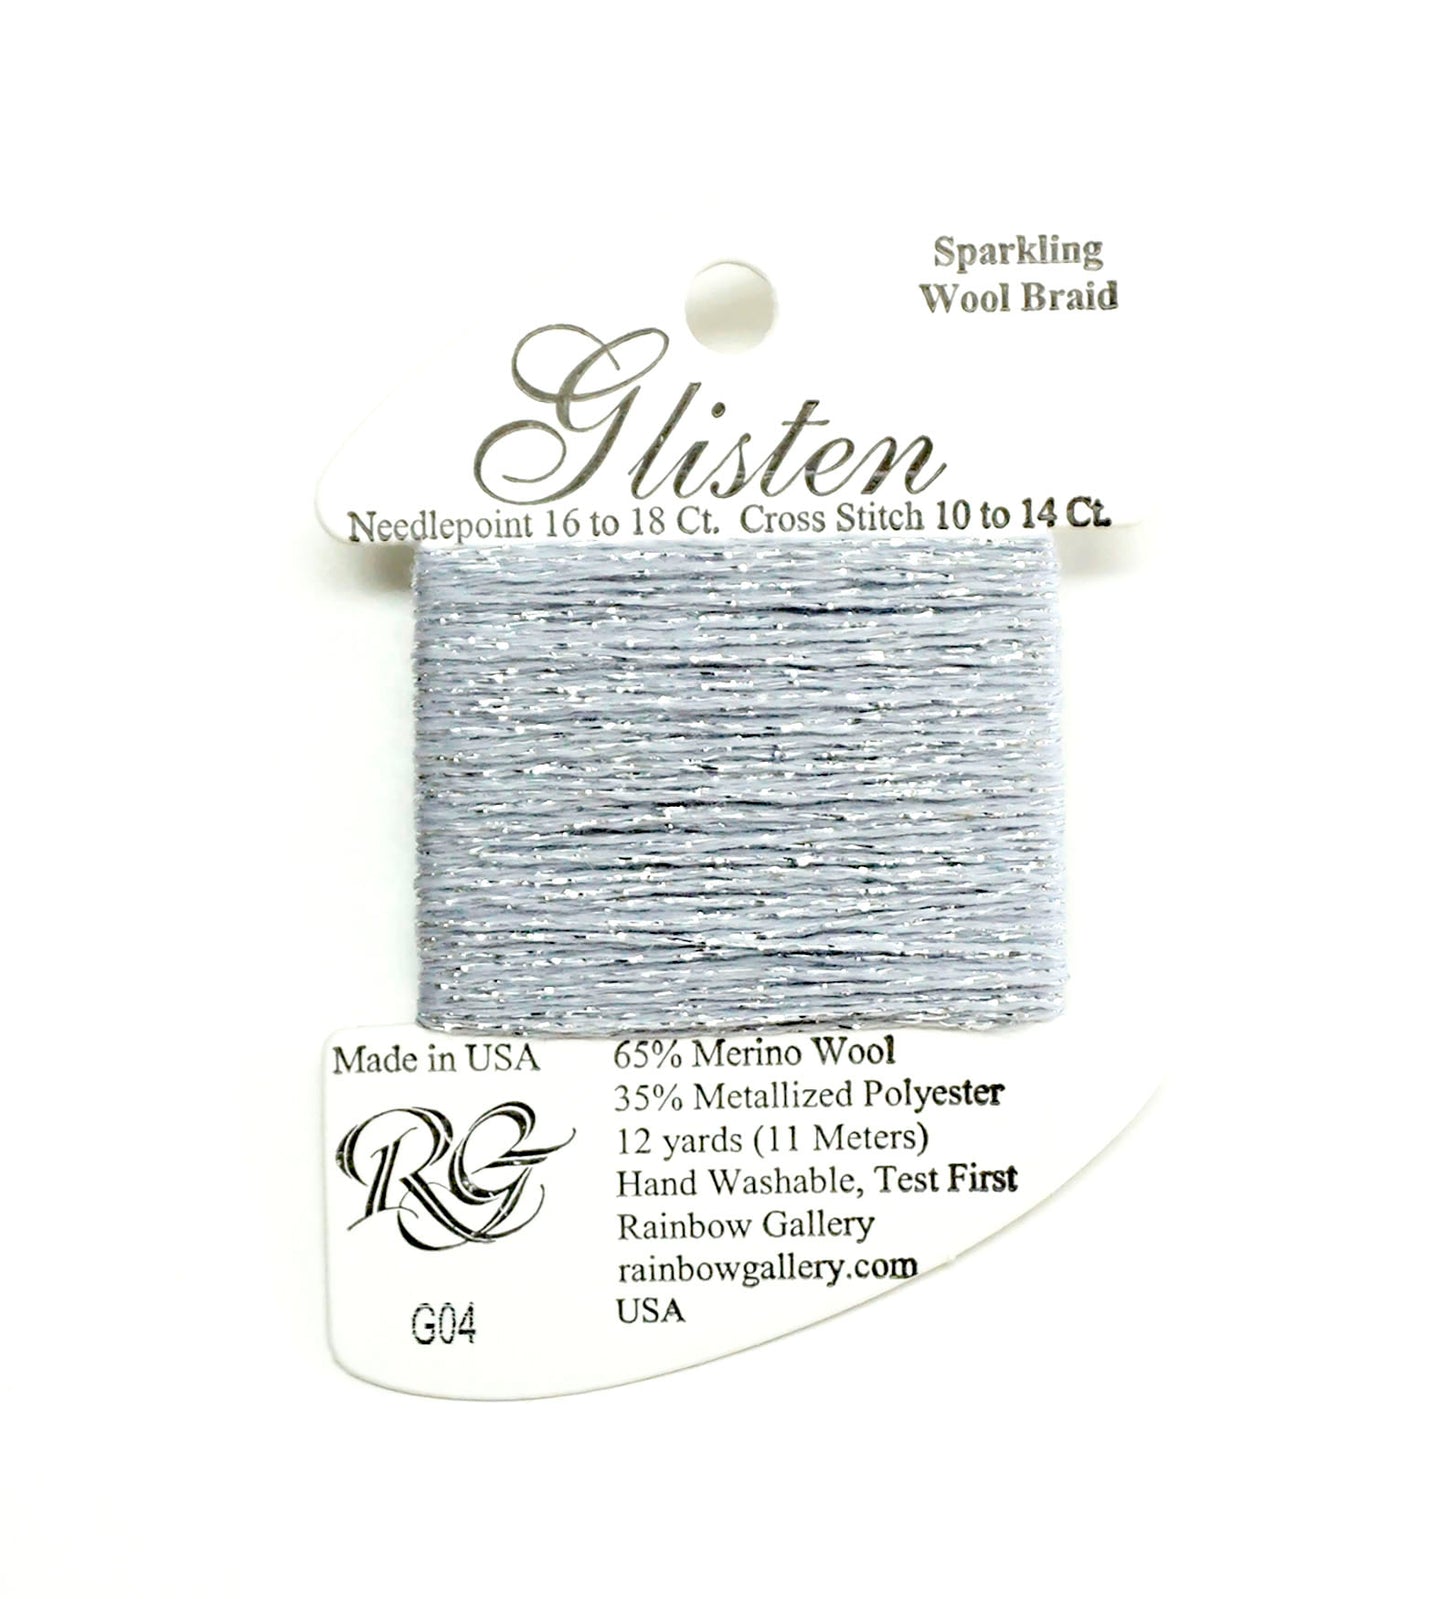 GLISTEN Sparkling Braid #04 "Silvery Moon" Needlepoint Thread Rainbow Gallery